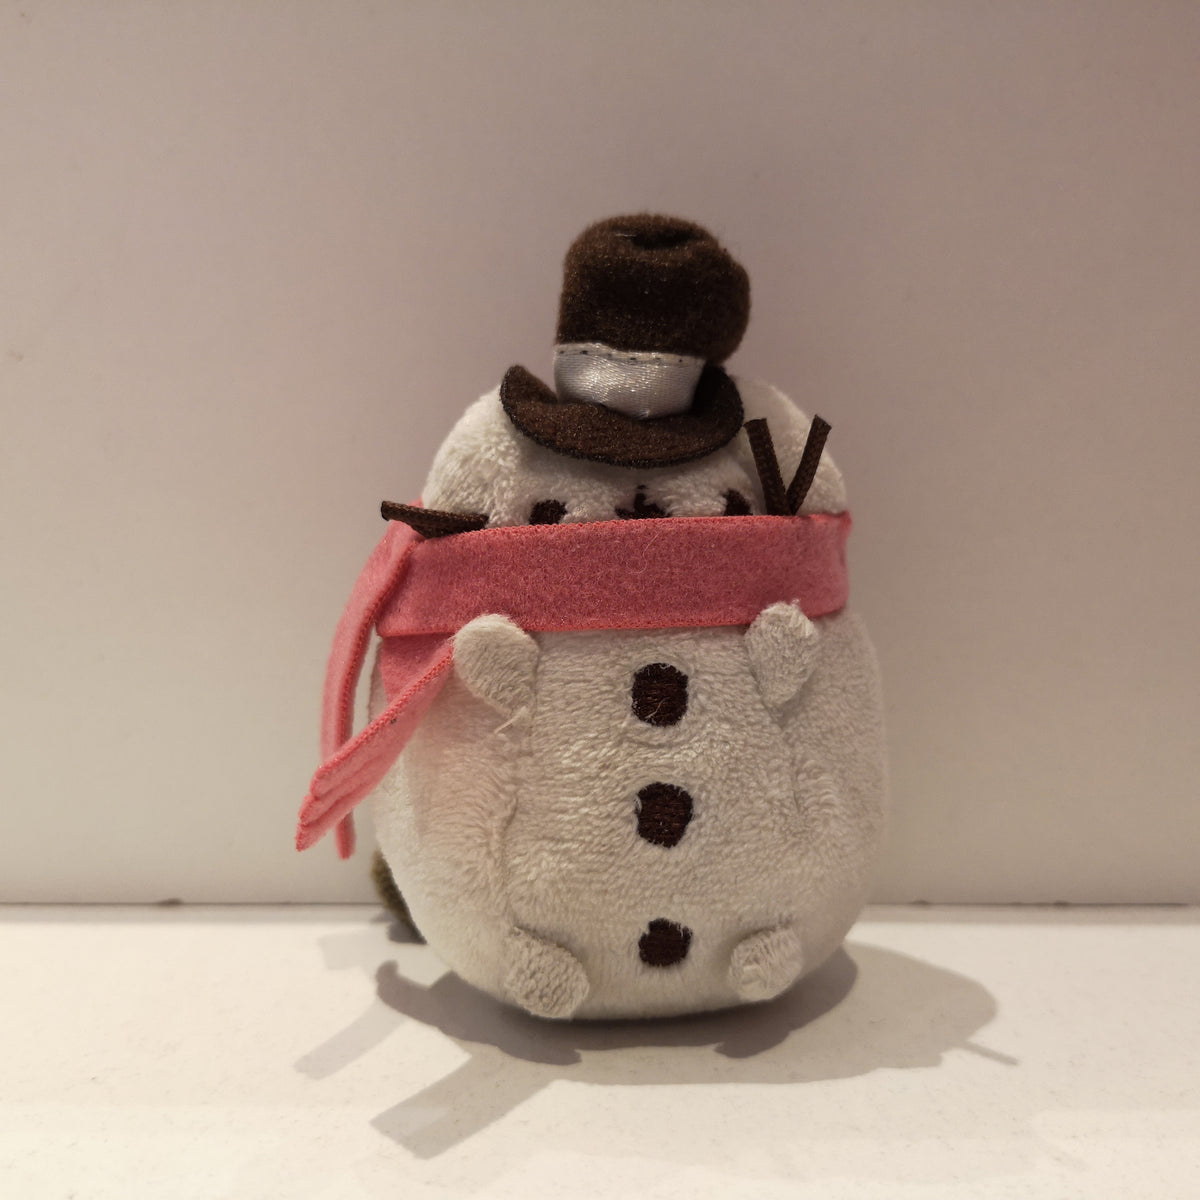 Snowman Pusheen mini Plush toy